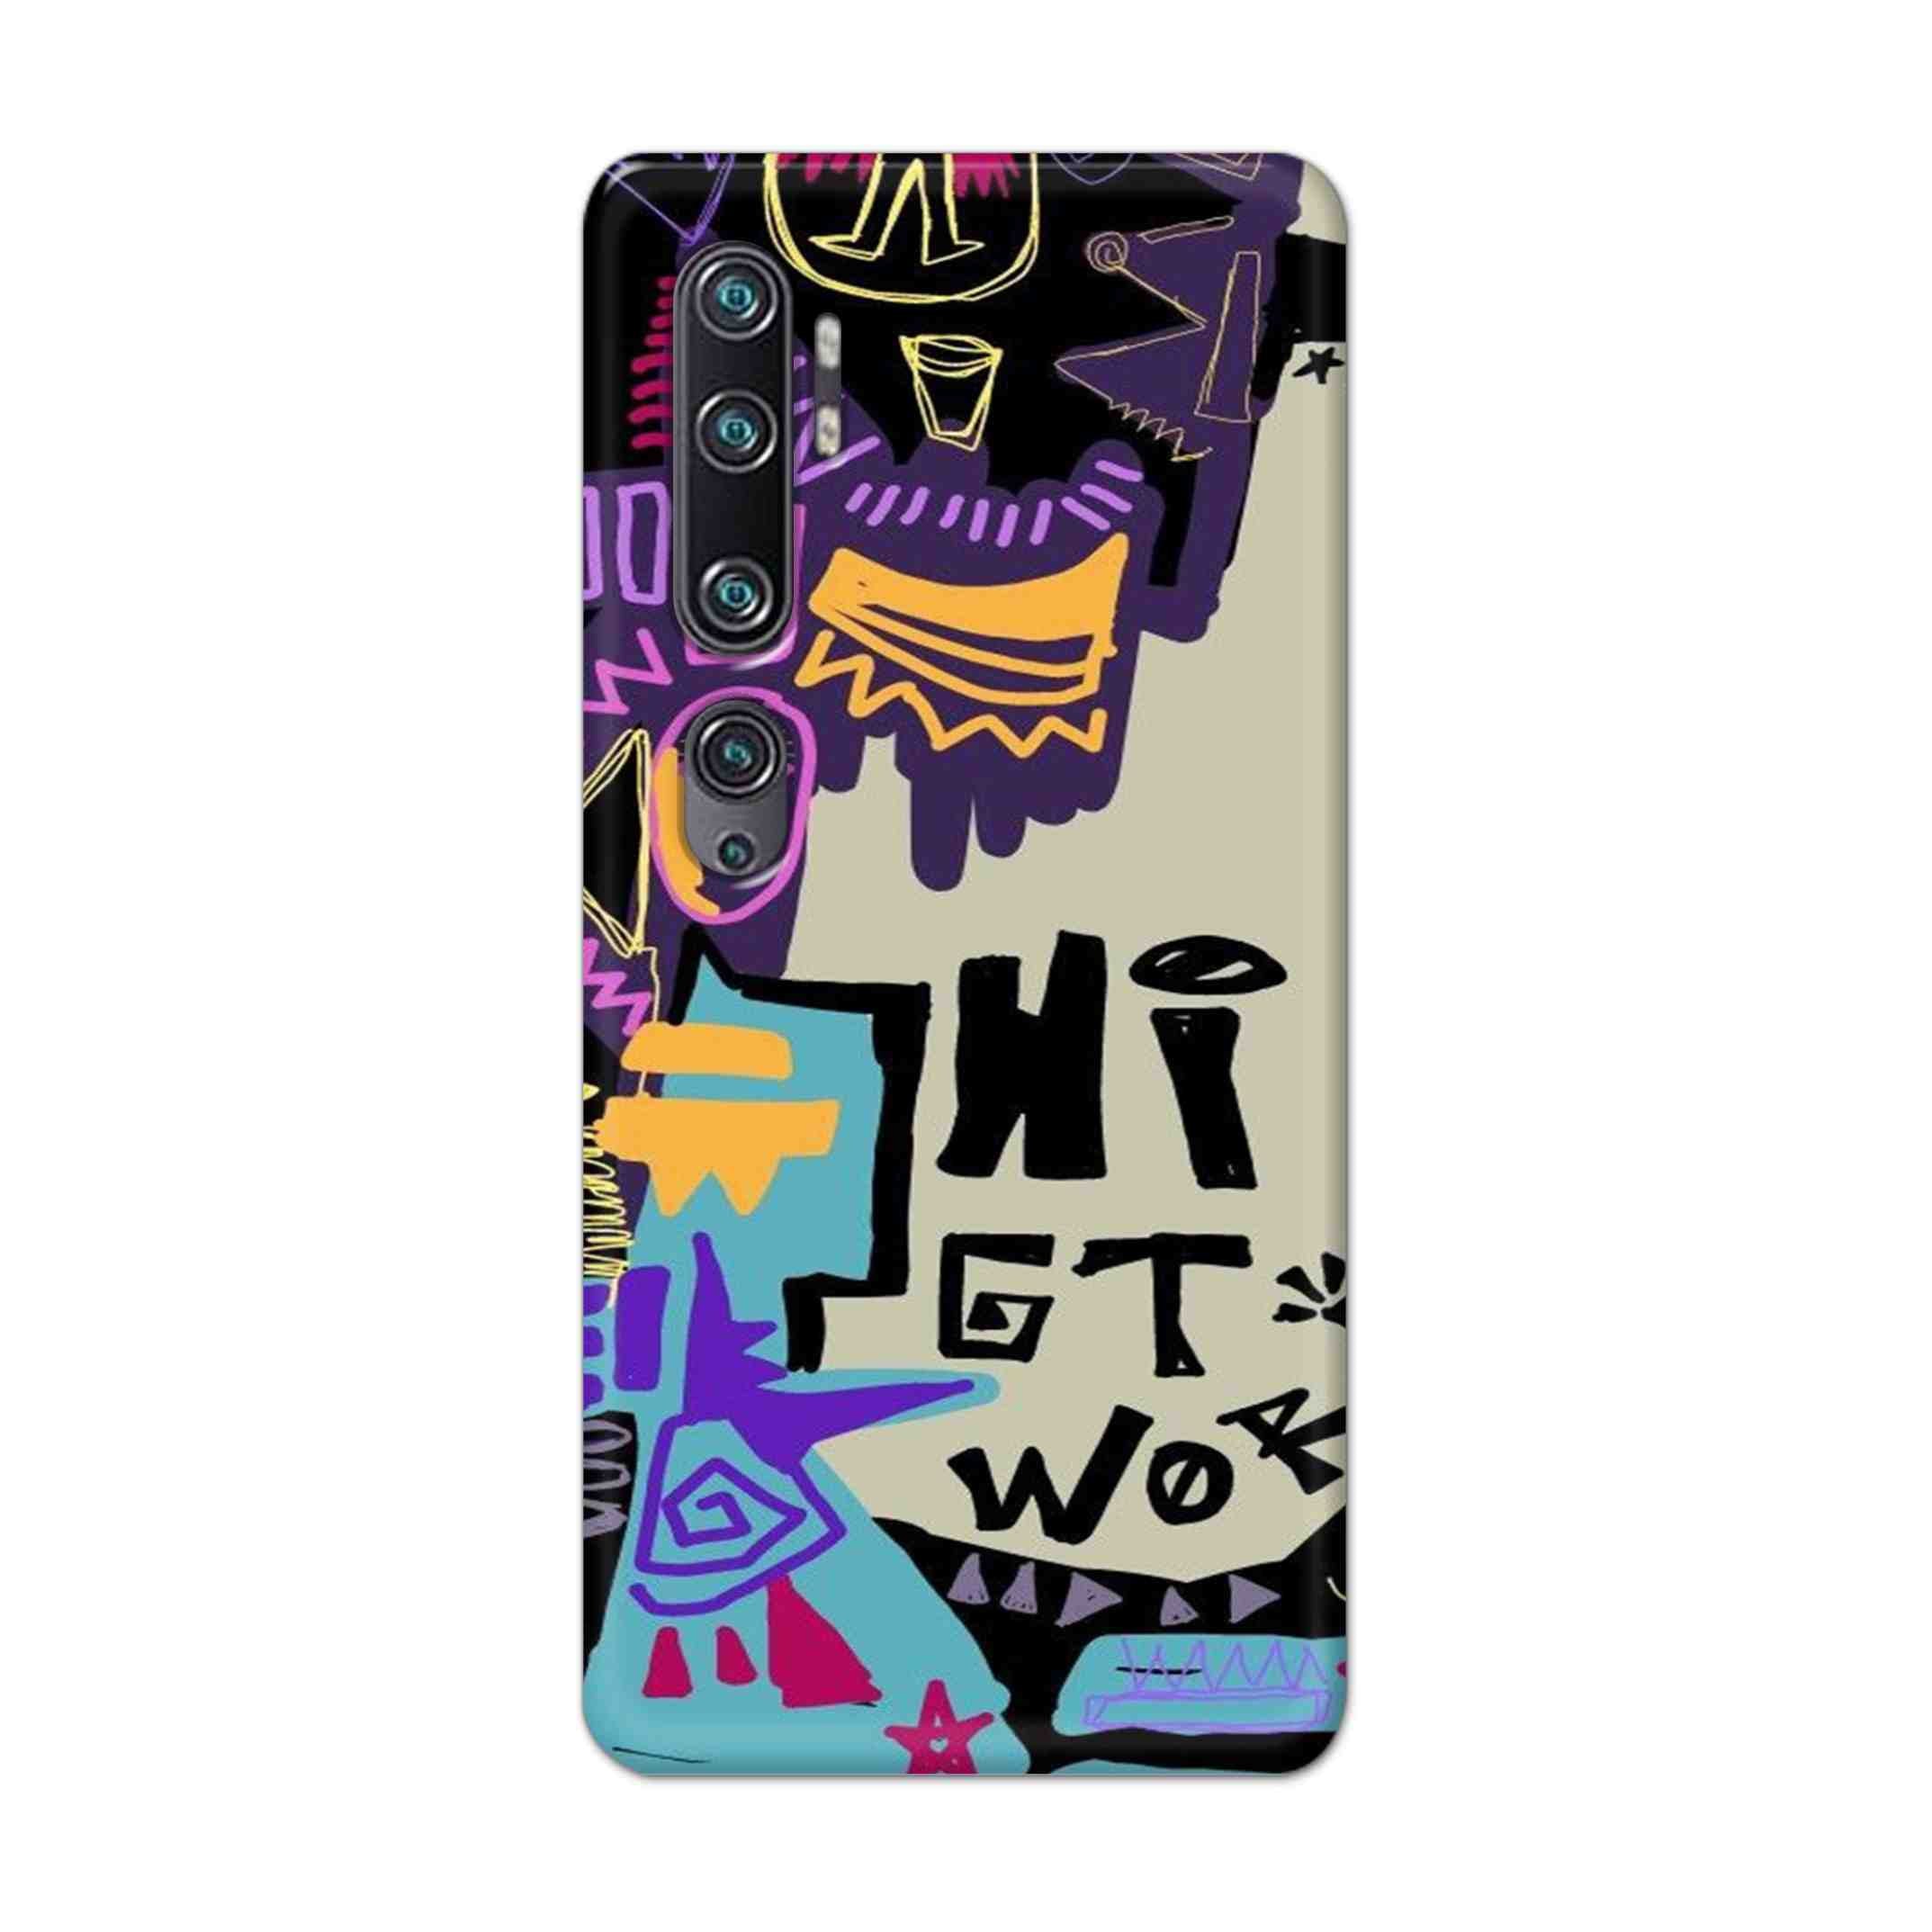 Buy Hi Gt World Hard Back Mobile Phone Case Cover For Xiaomi Mi Note 10 Online